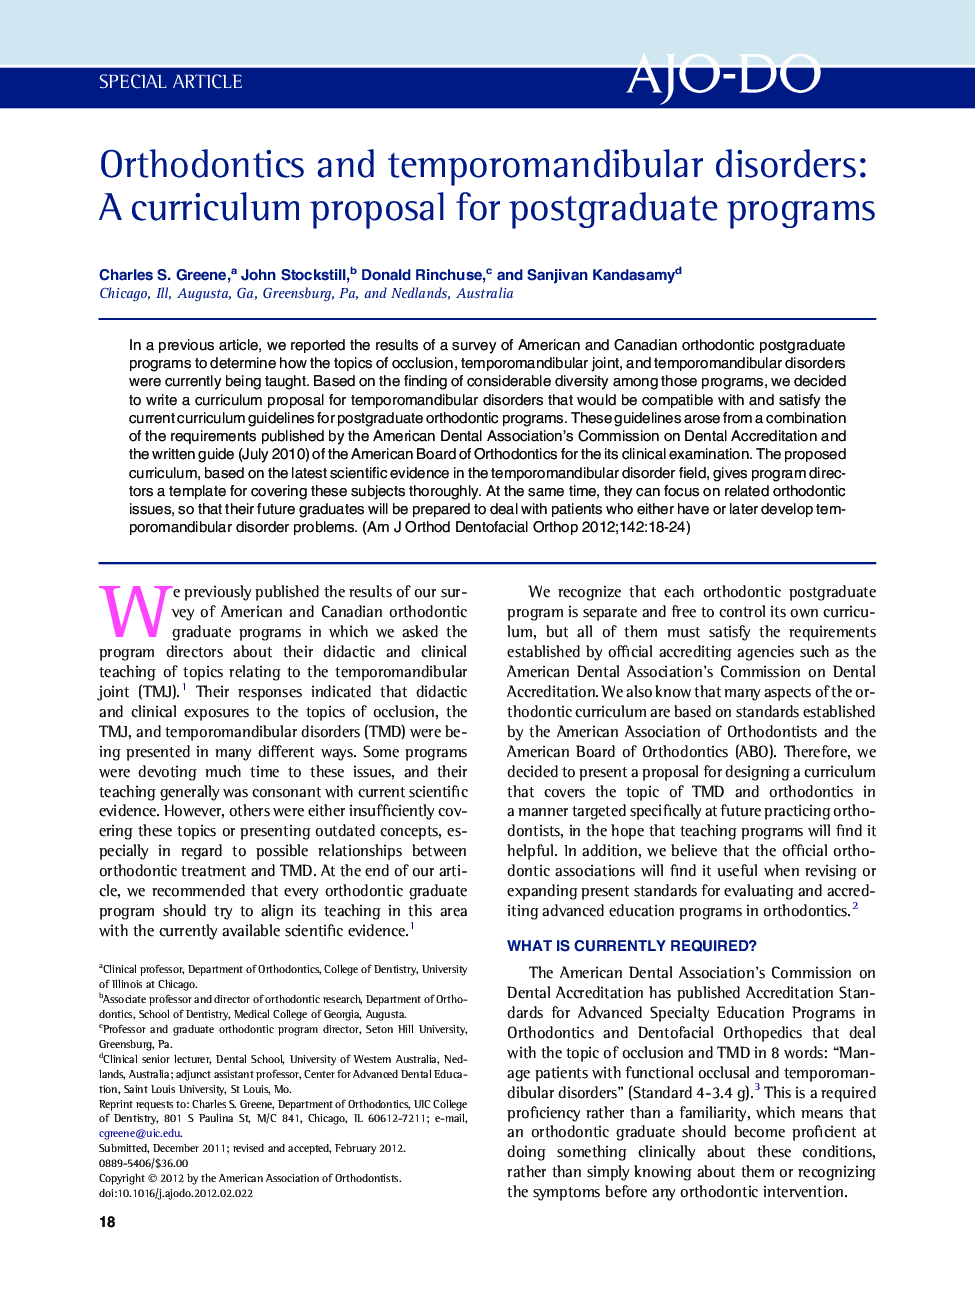 Orthodontics and temporomandibular disorders: A curriculum proposal for postgraduate programs